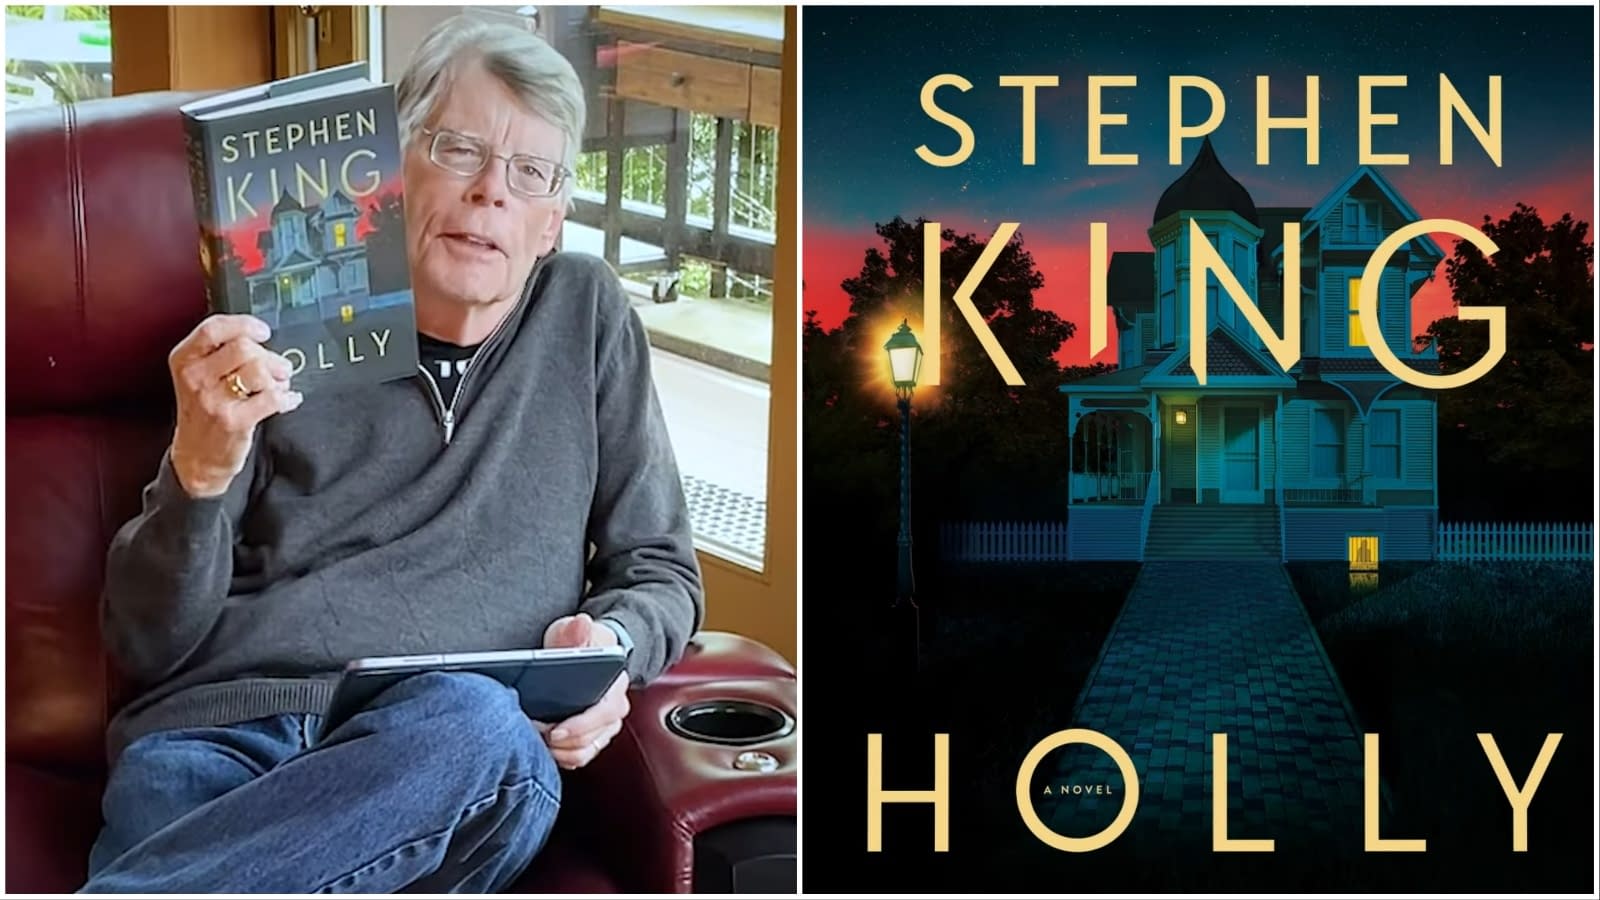 Holly Stephen King Reads From Holly Gibney Novel (VIDEO)